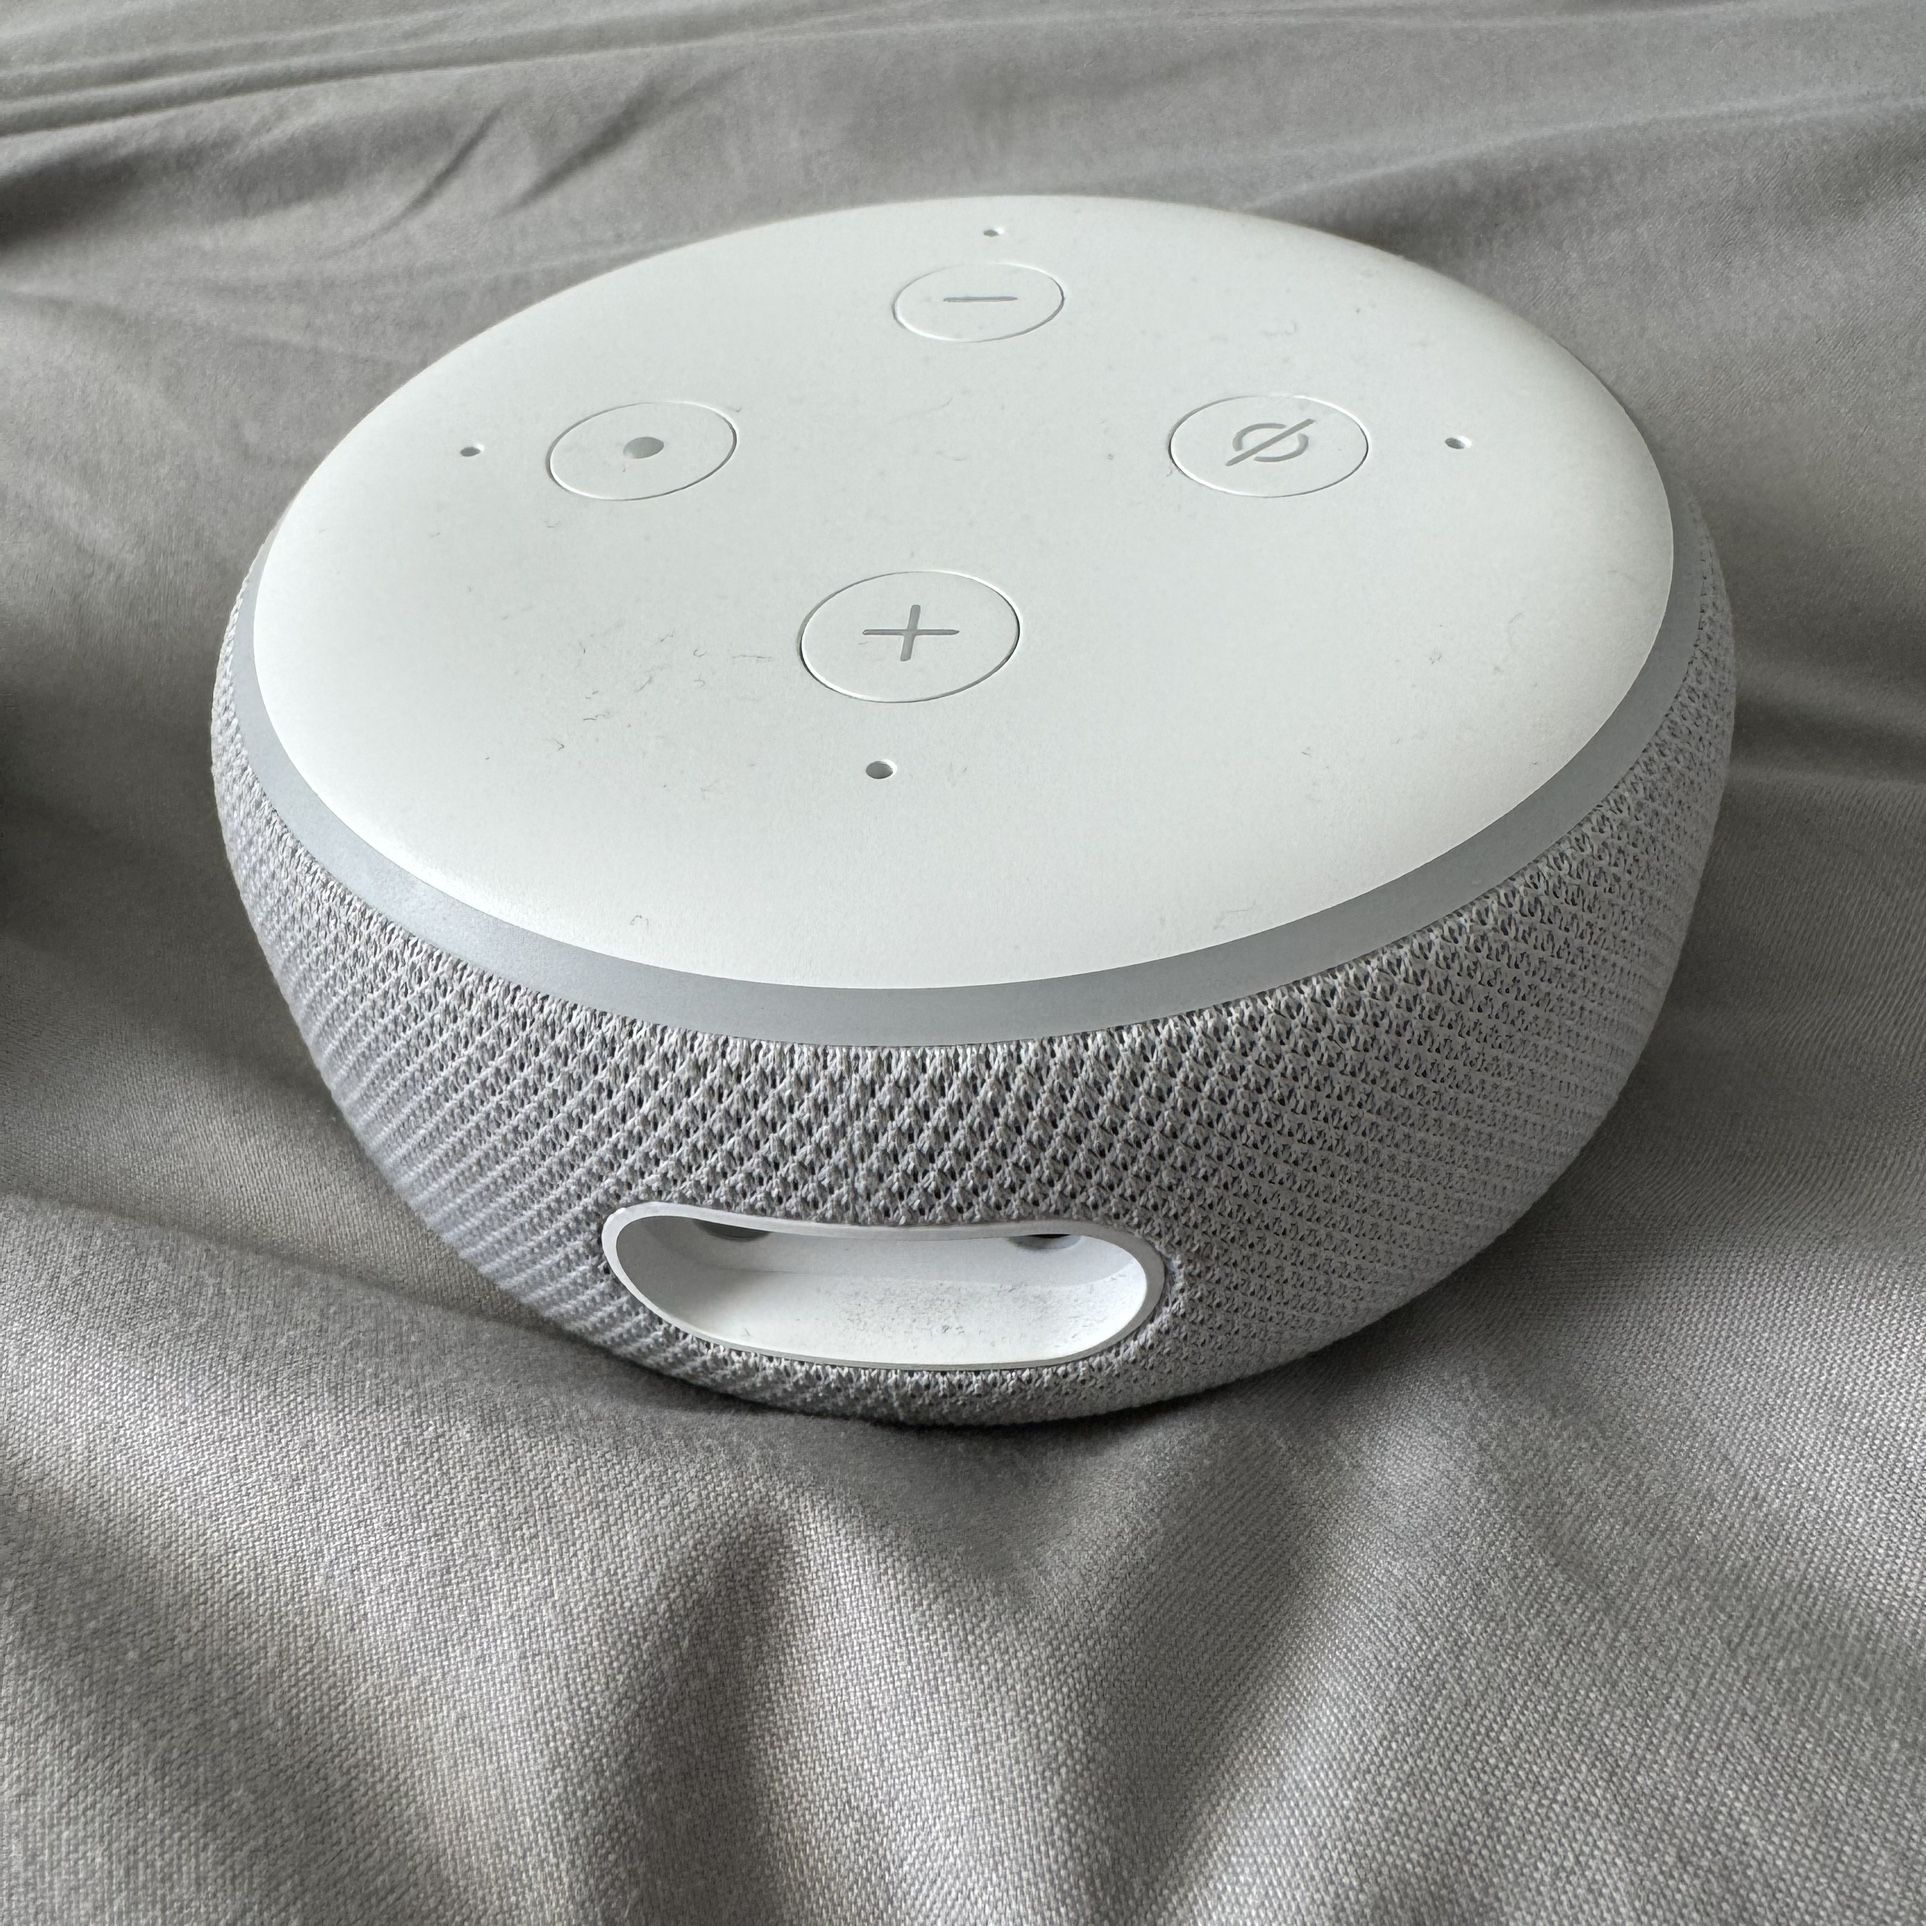 Amazon Alexa Echo Smart Speaker